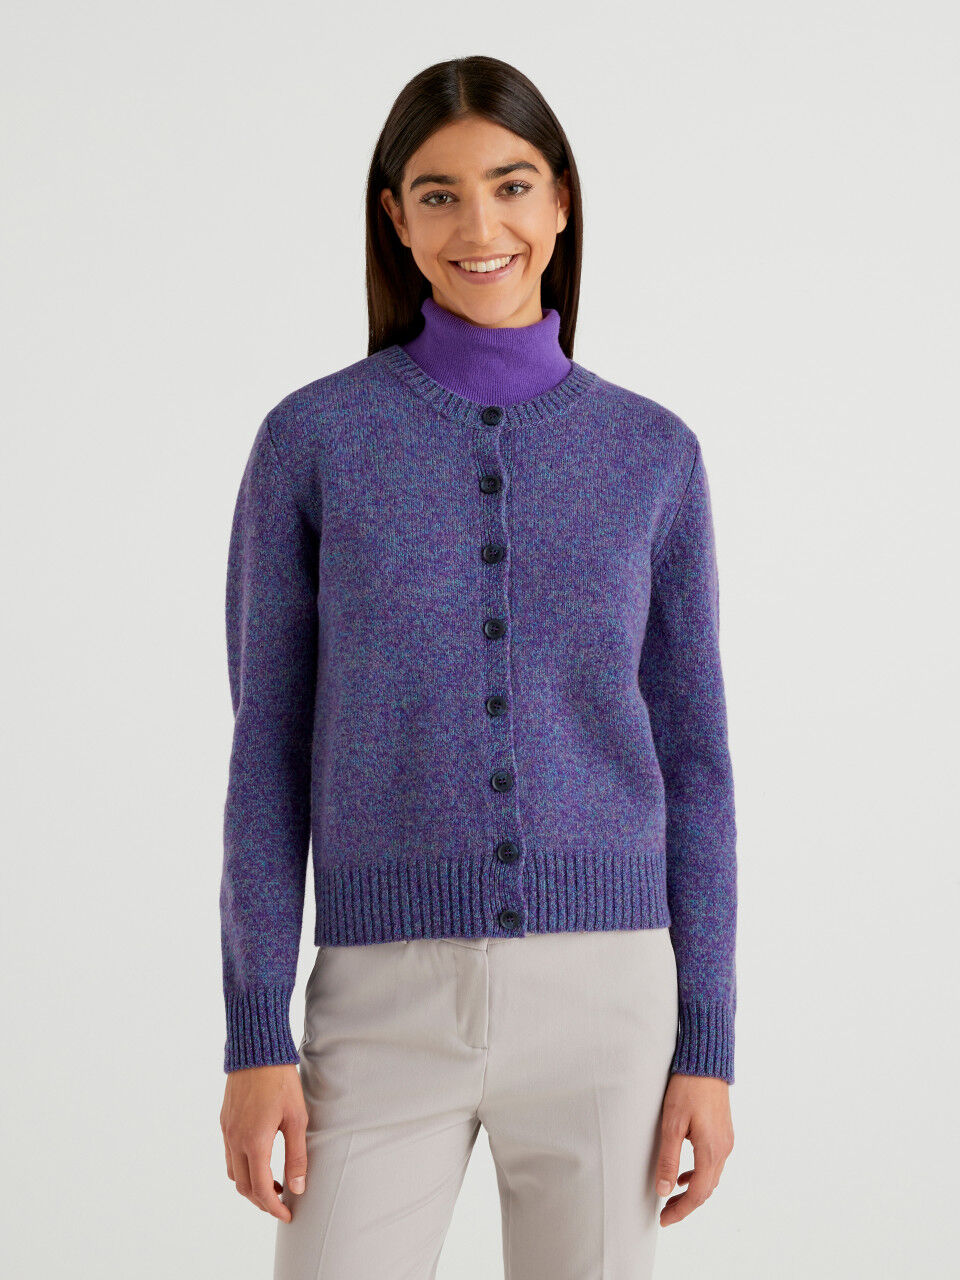 Lilax Little Girls Knit Uniform Cardigan Long Sleeve Sweater 